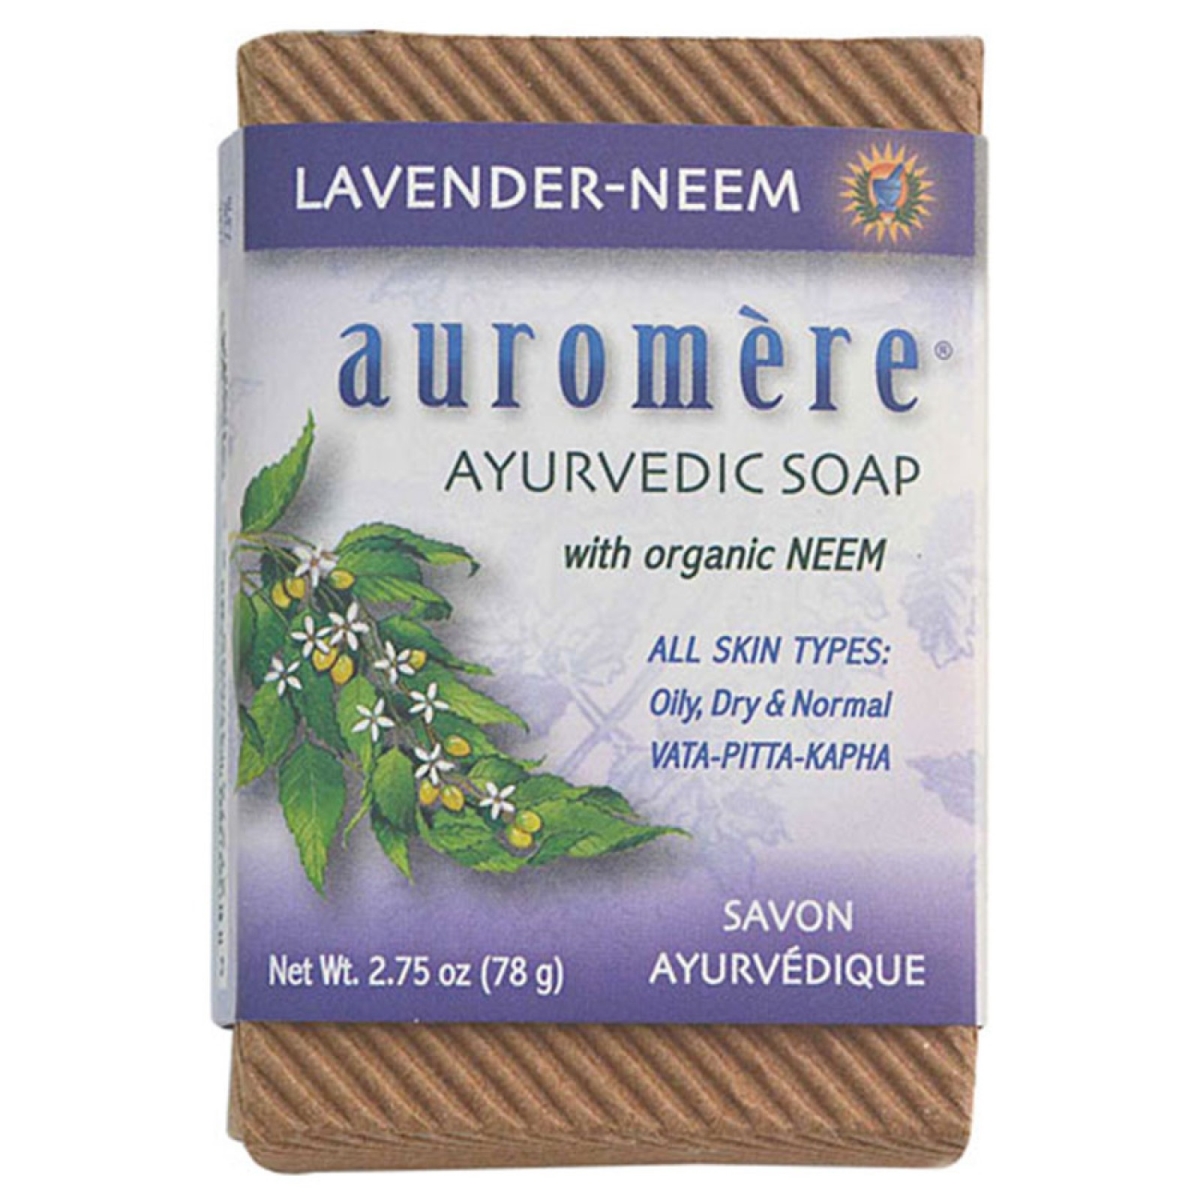 221038 2.75 Oz Auromere Lavender-neem Ayurvedic Bar Soap